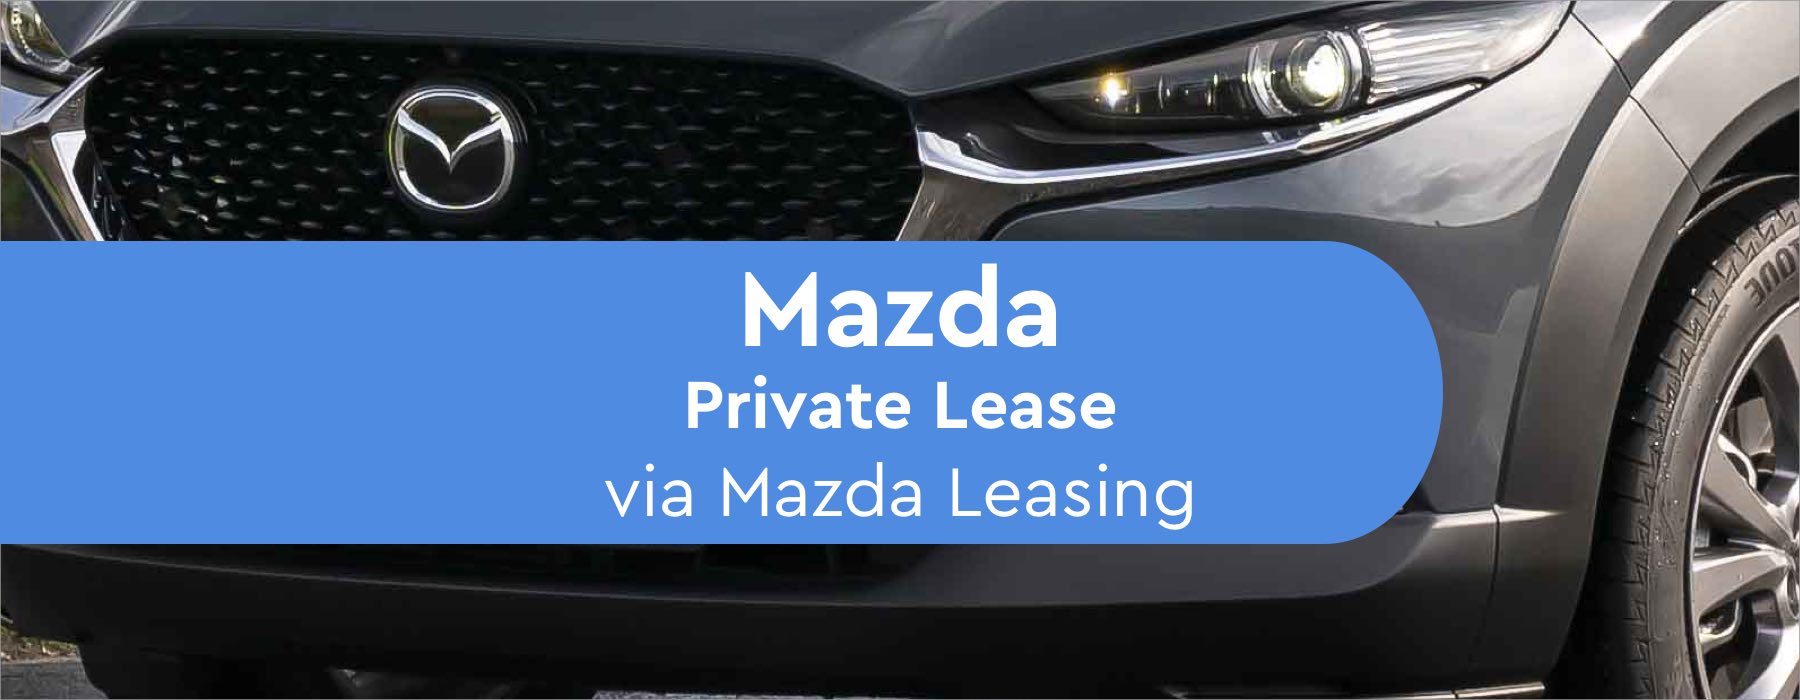 Mazda Leasing Private Lease